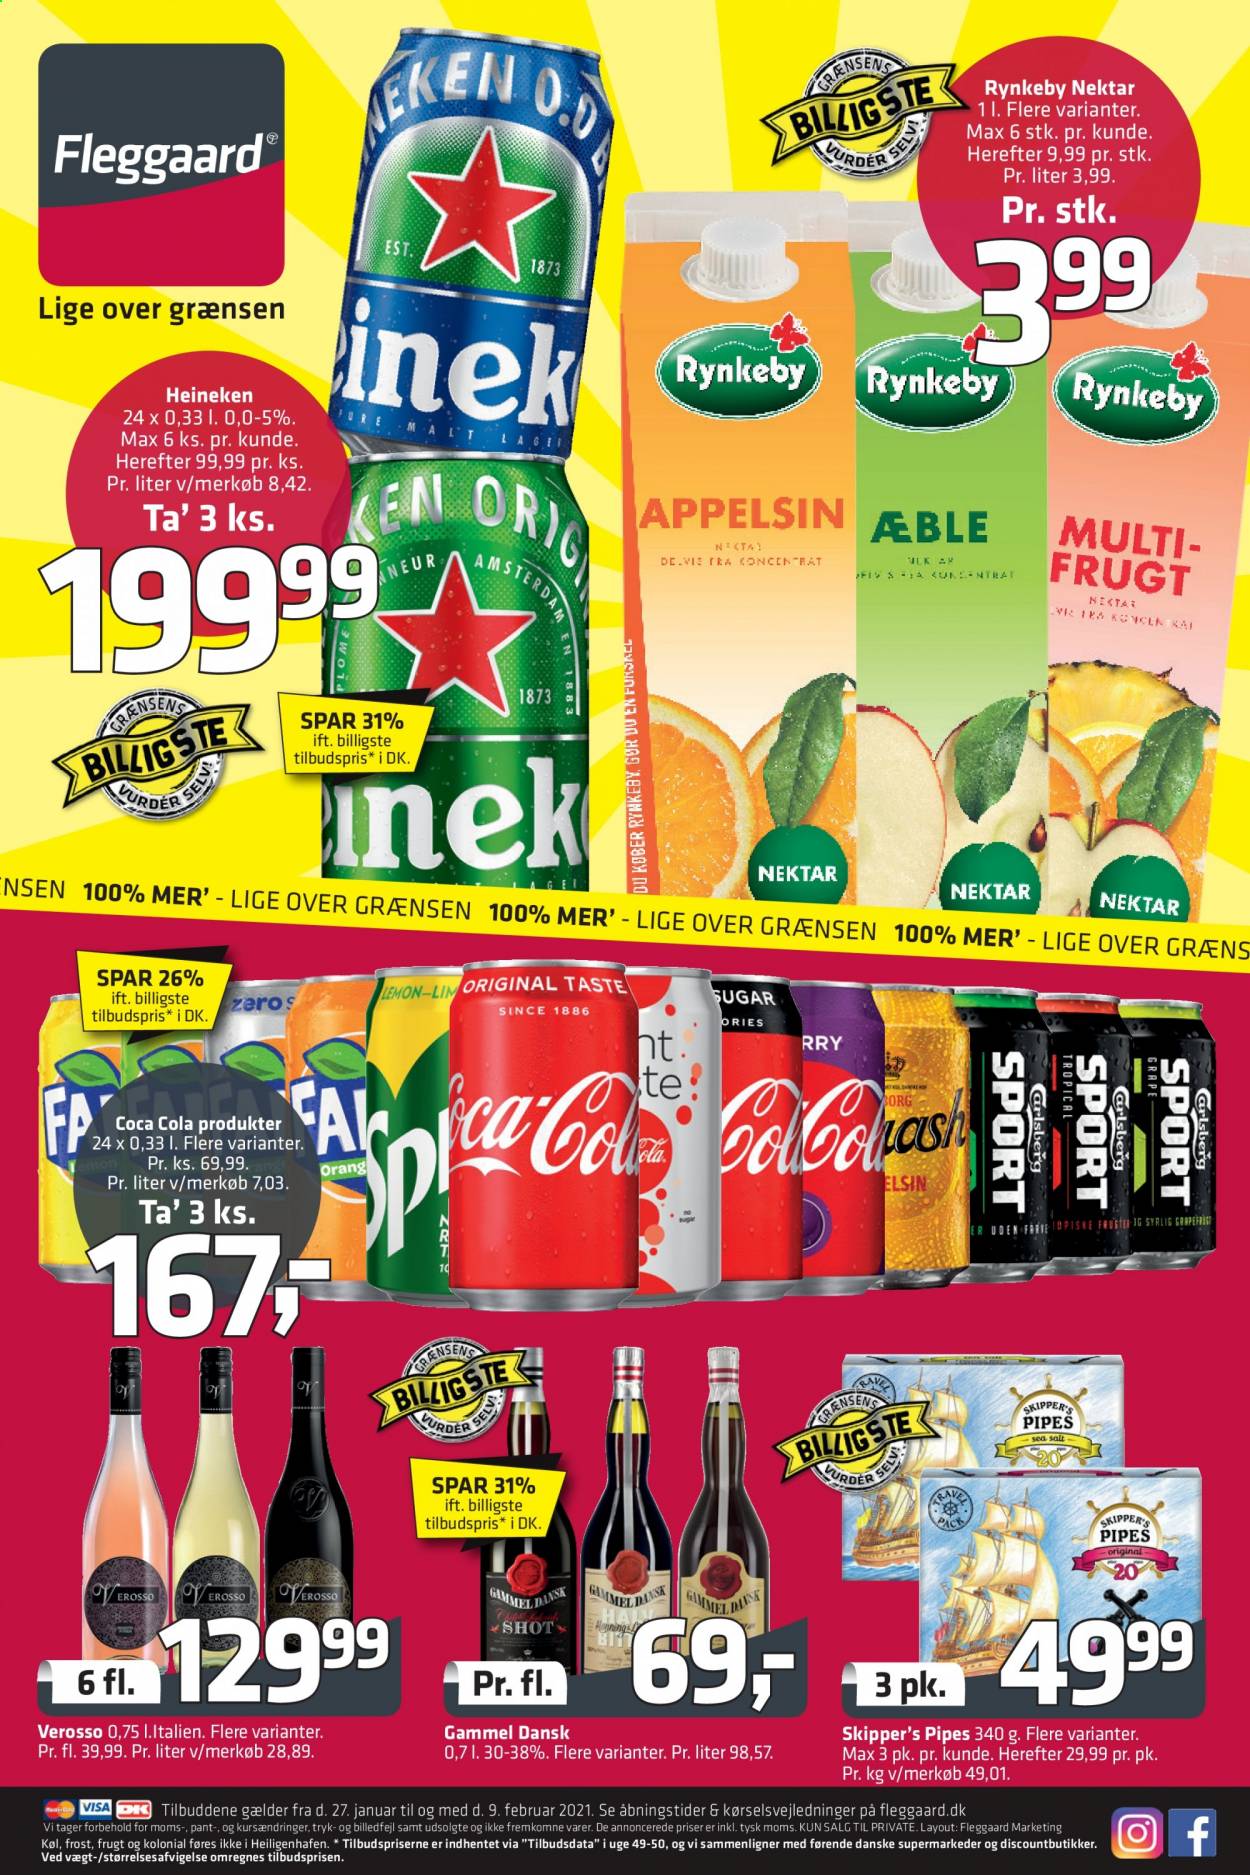 thumbnail - Fleggaard tilbud  - 27.1.2021 - 9.2.2021 - tilbudsprodukter - Heineken, Coca-Cola. Side 1.